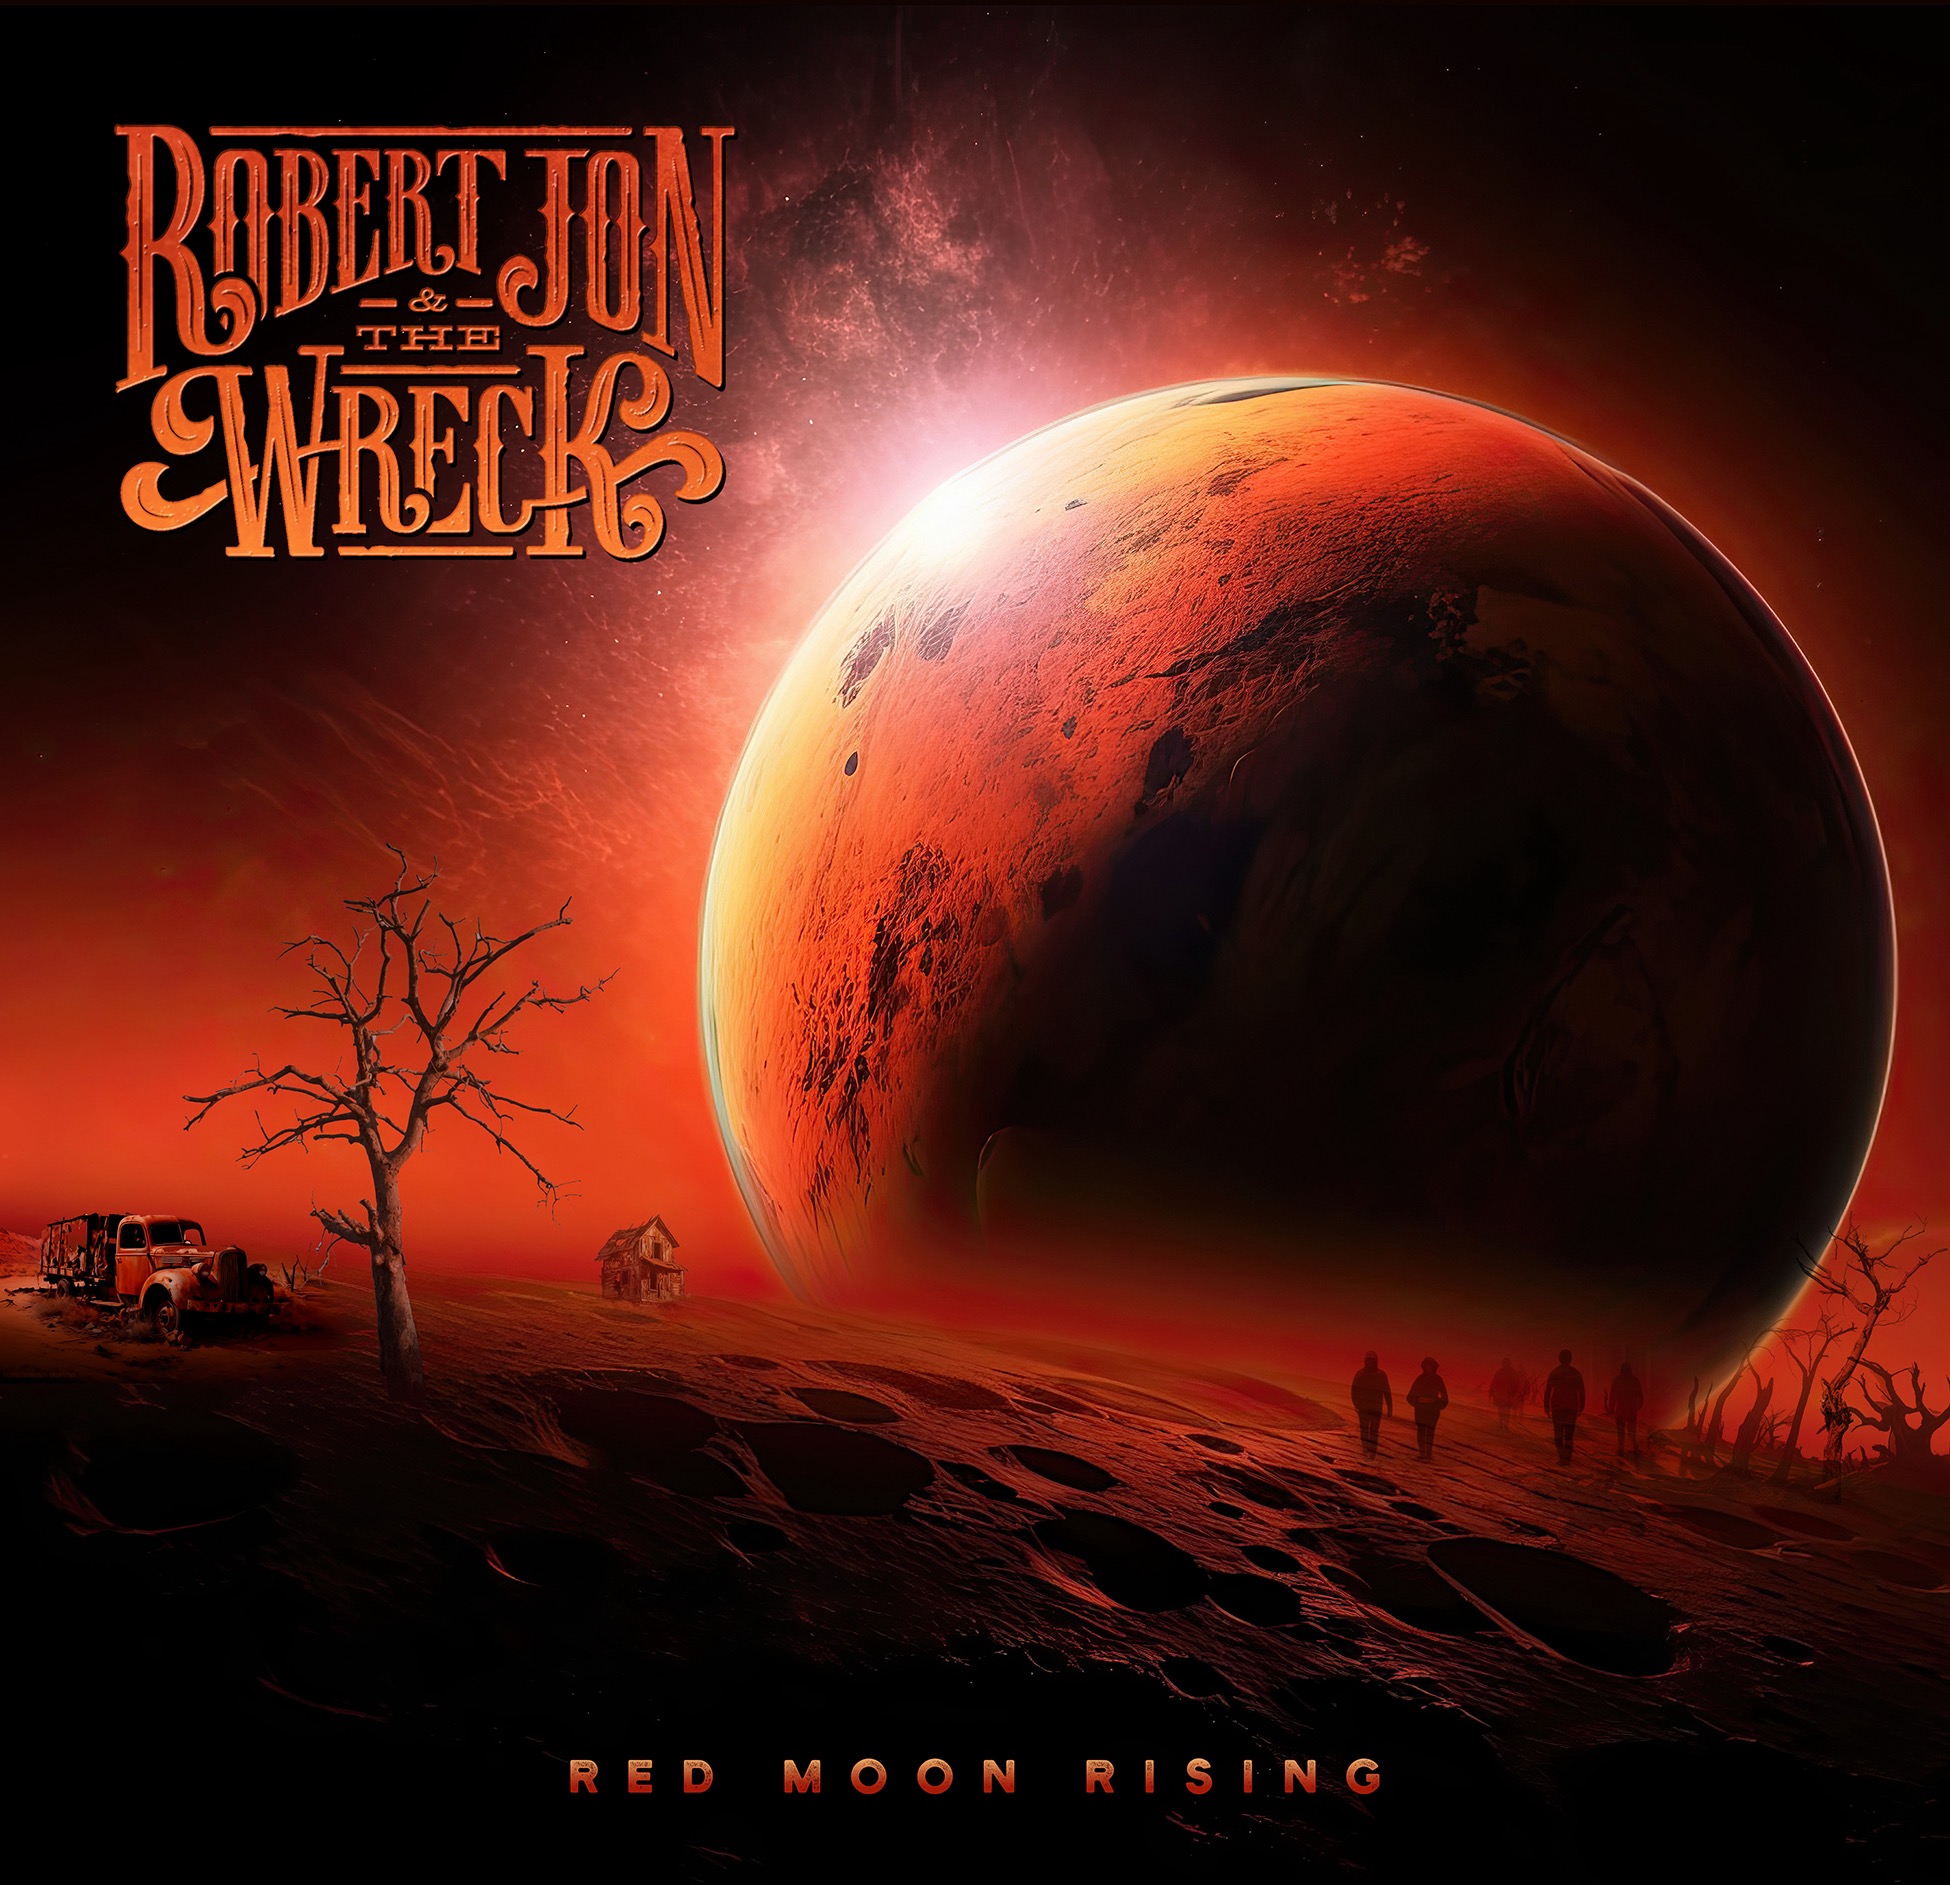 Robert Jon & The Wreck Announce “Red Moon Rising”